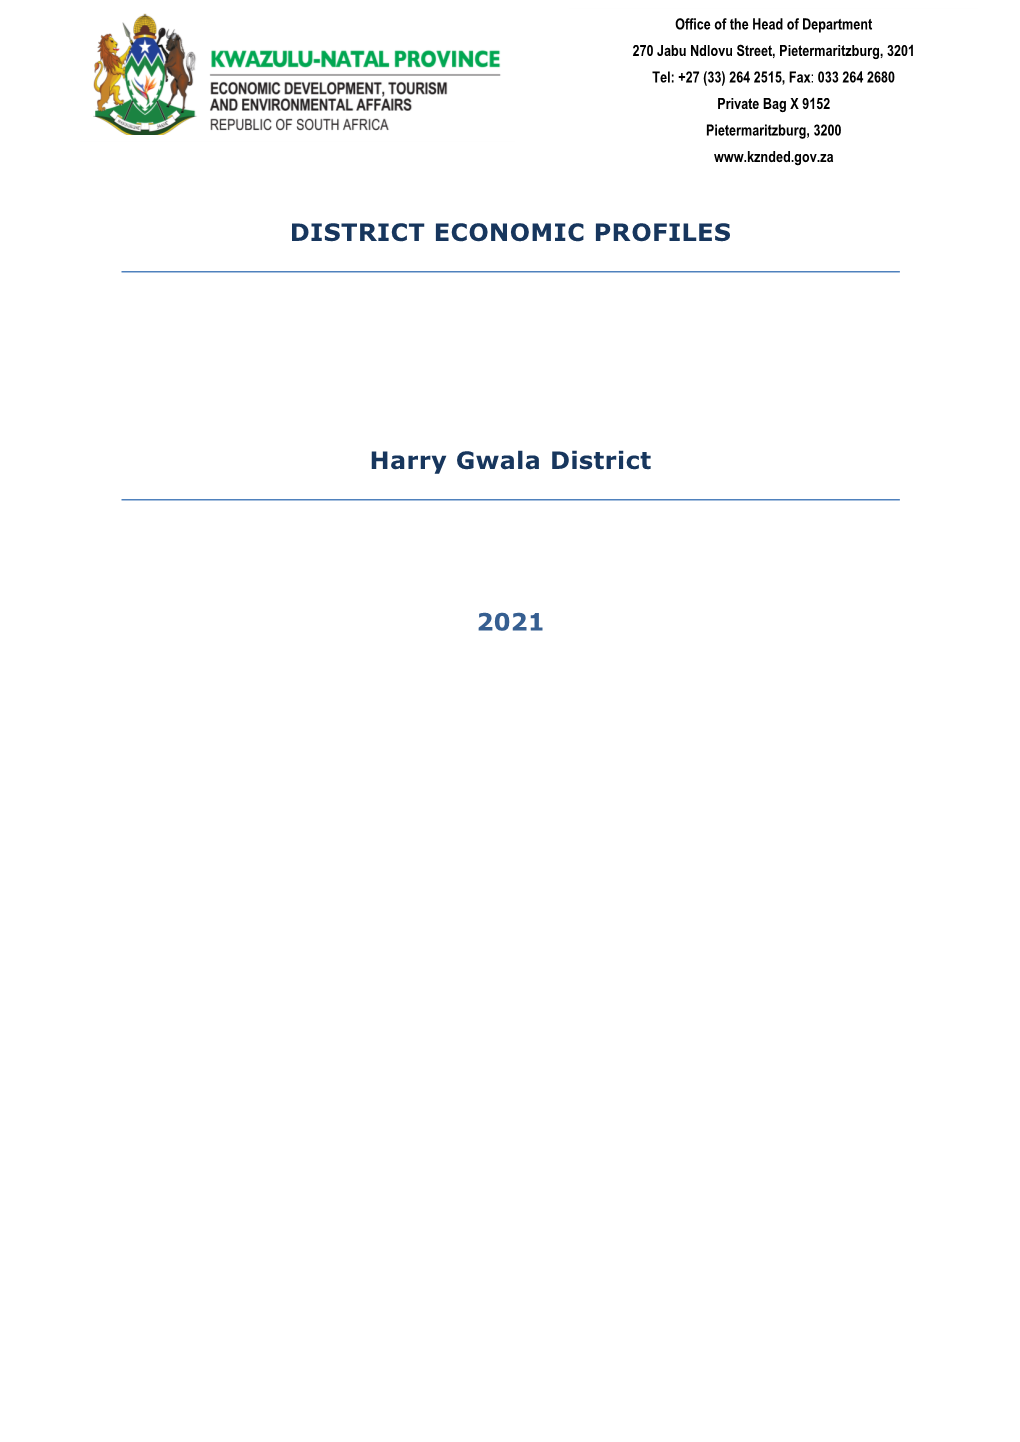 DISTRICT ECONOMIC PROFILES Harry Gwala District 2021